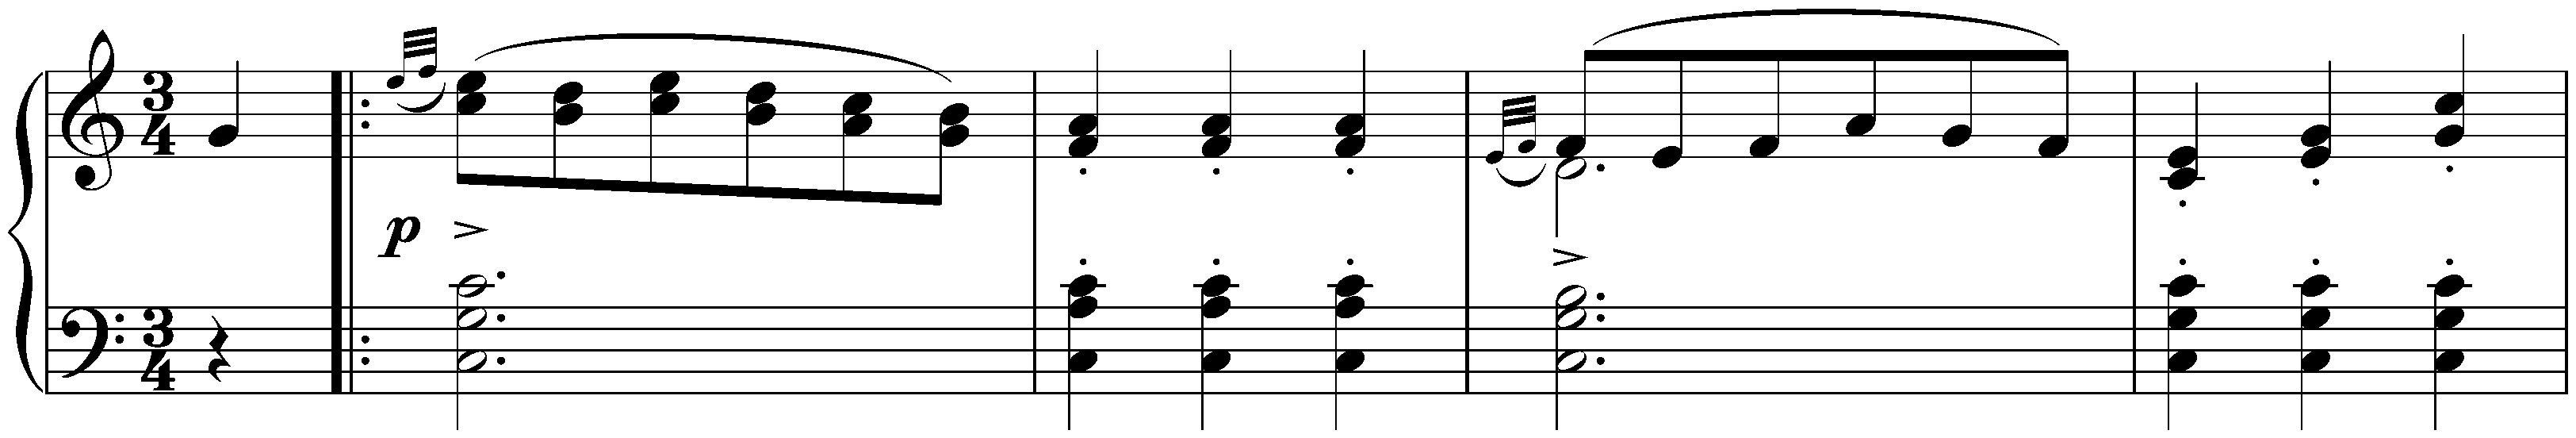 Sixteen deutsche Tänze and two Ecossaises, D 783; 12. Sixteen deutsche Tänze, no. 12 in C major